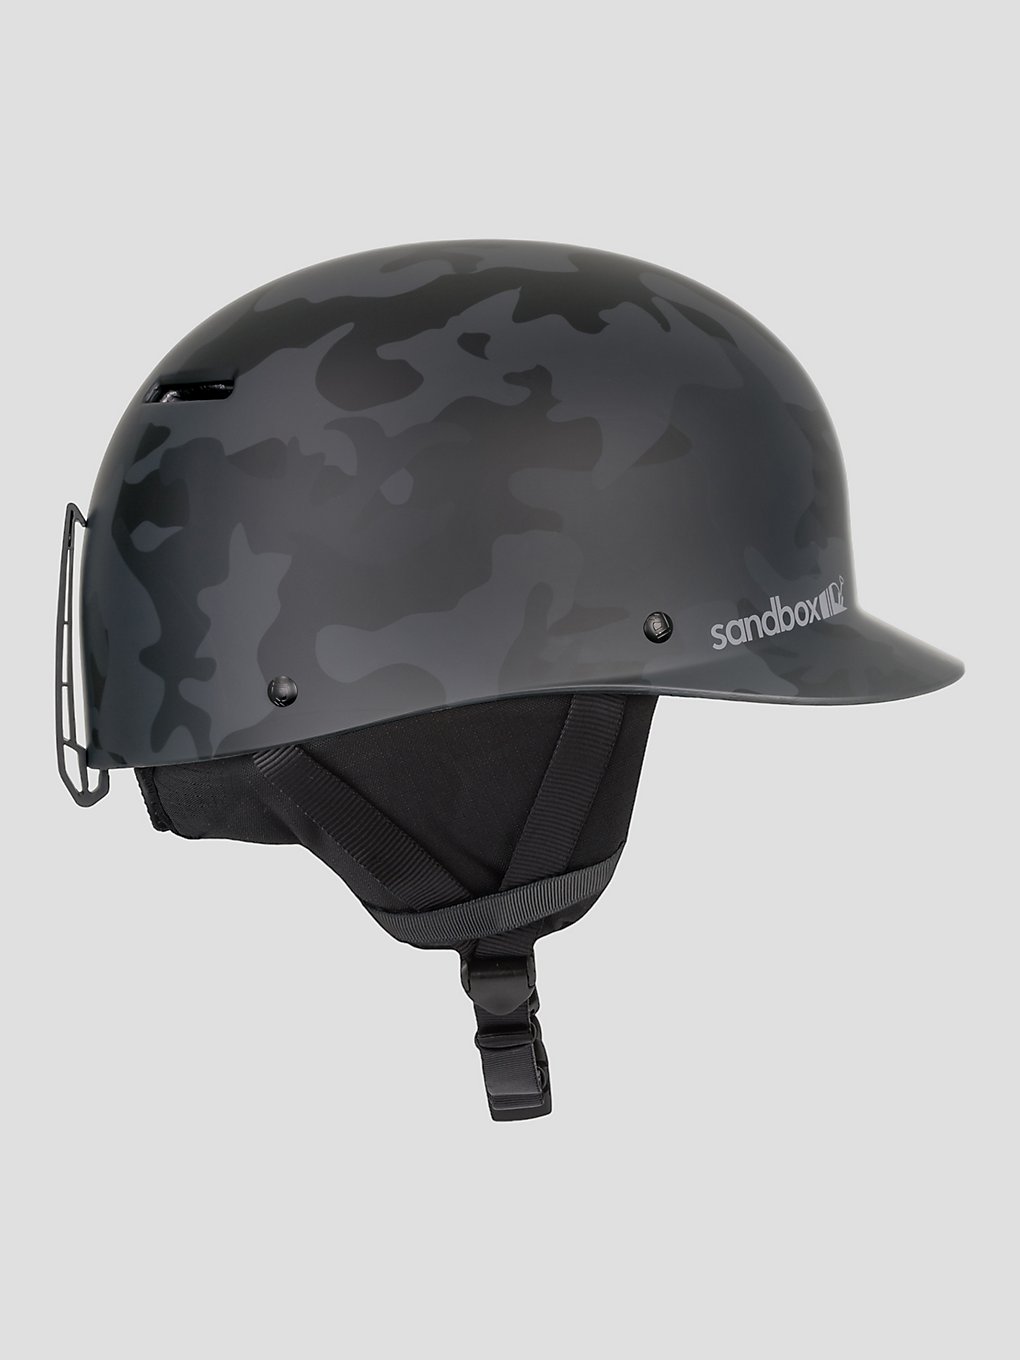 Sandbox Classic 2.0 Snow Helm black camo (matte) kaufen